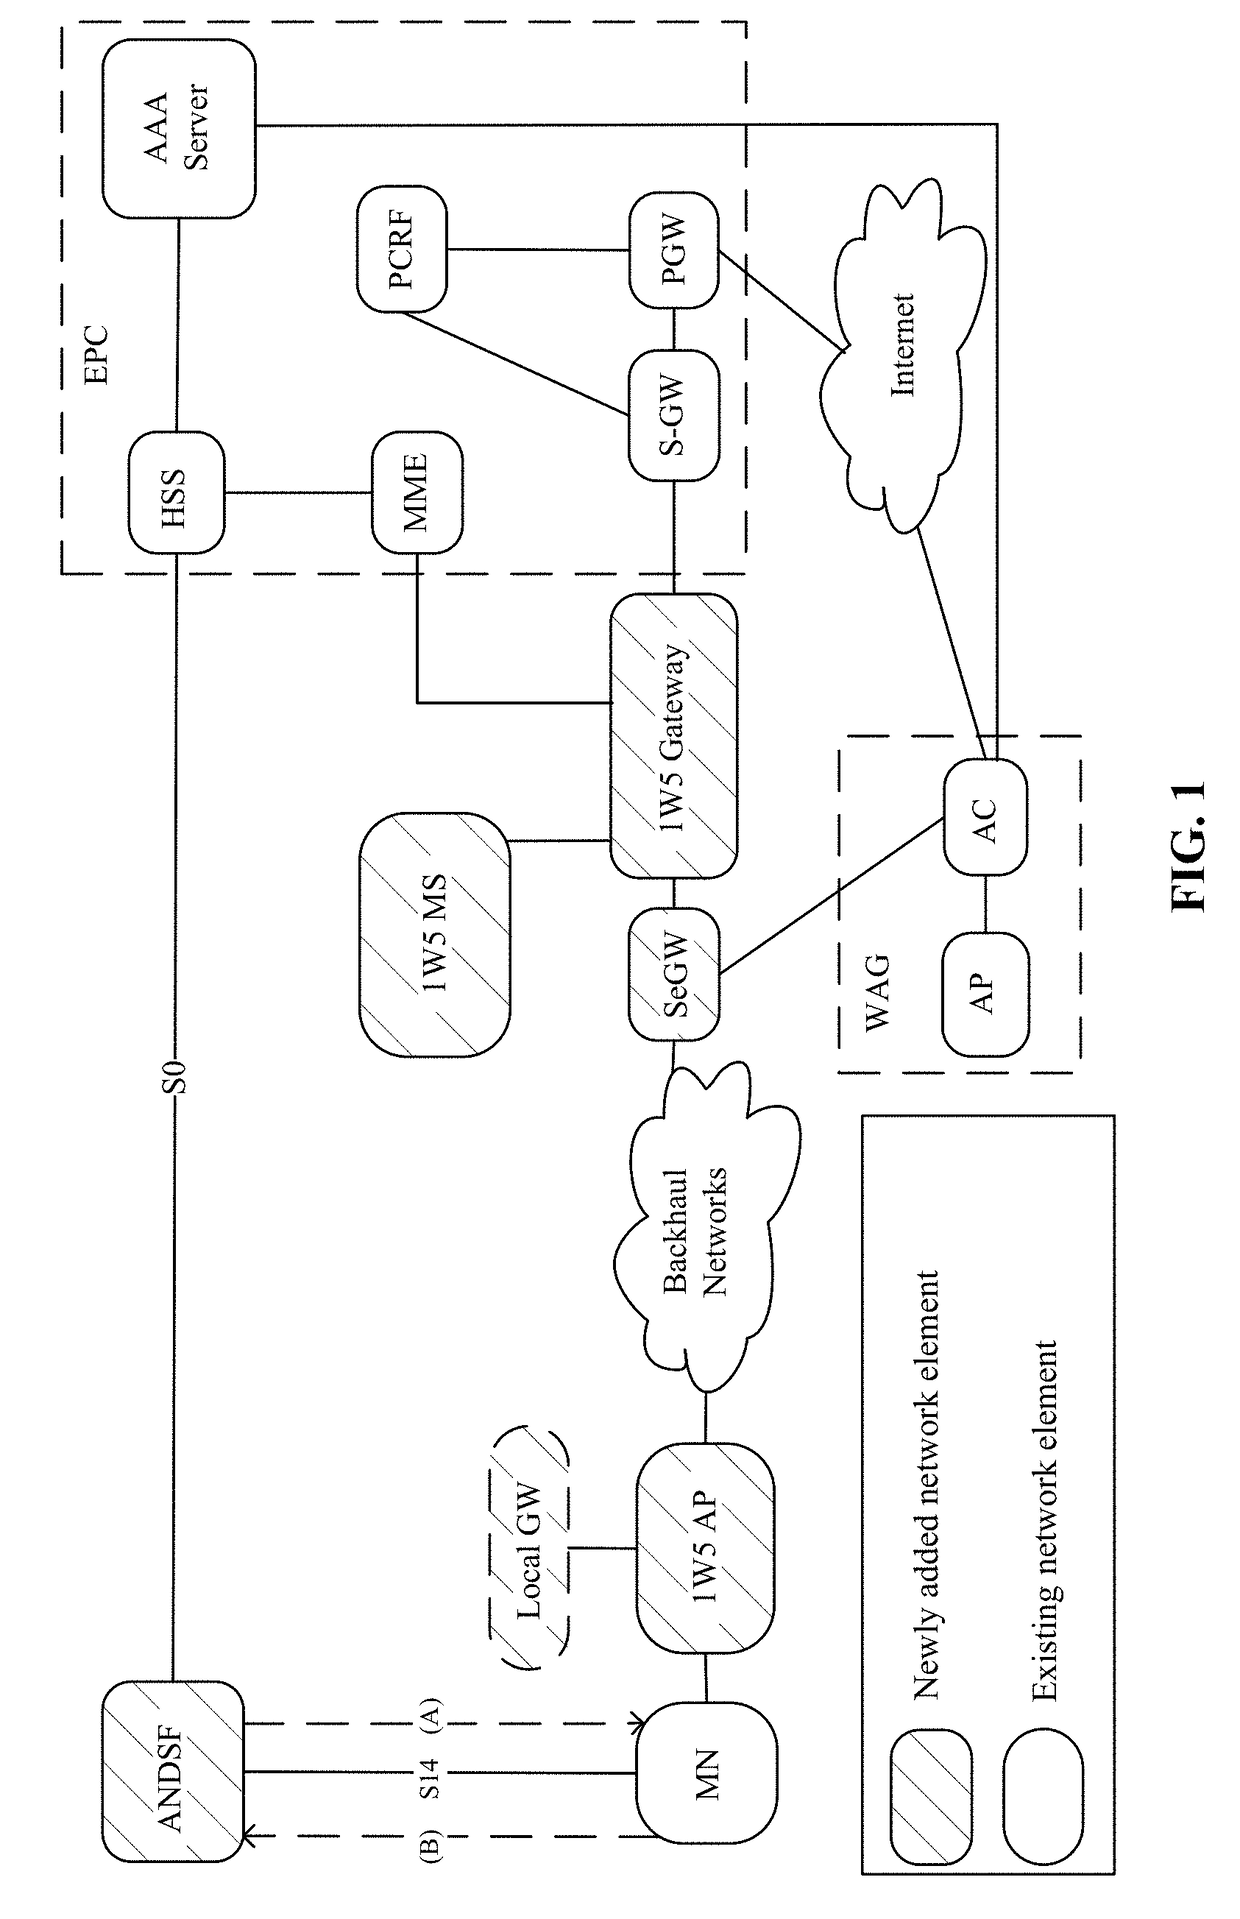 Method of 5g/wlan vertical handover based on fuzzy logic control